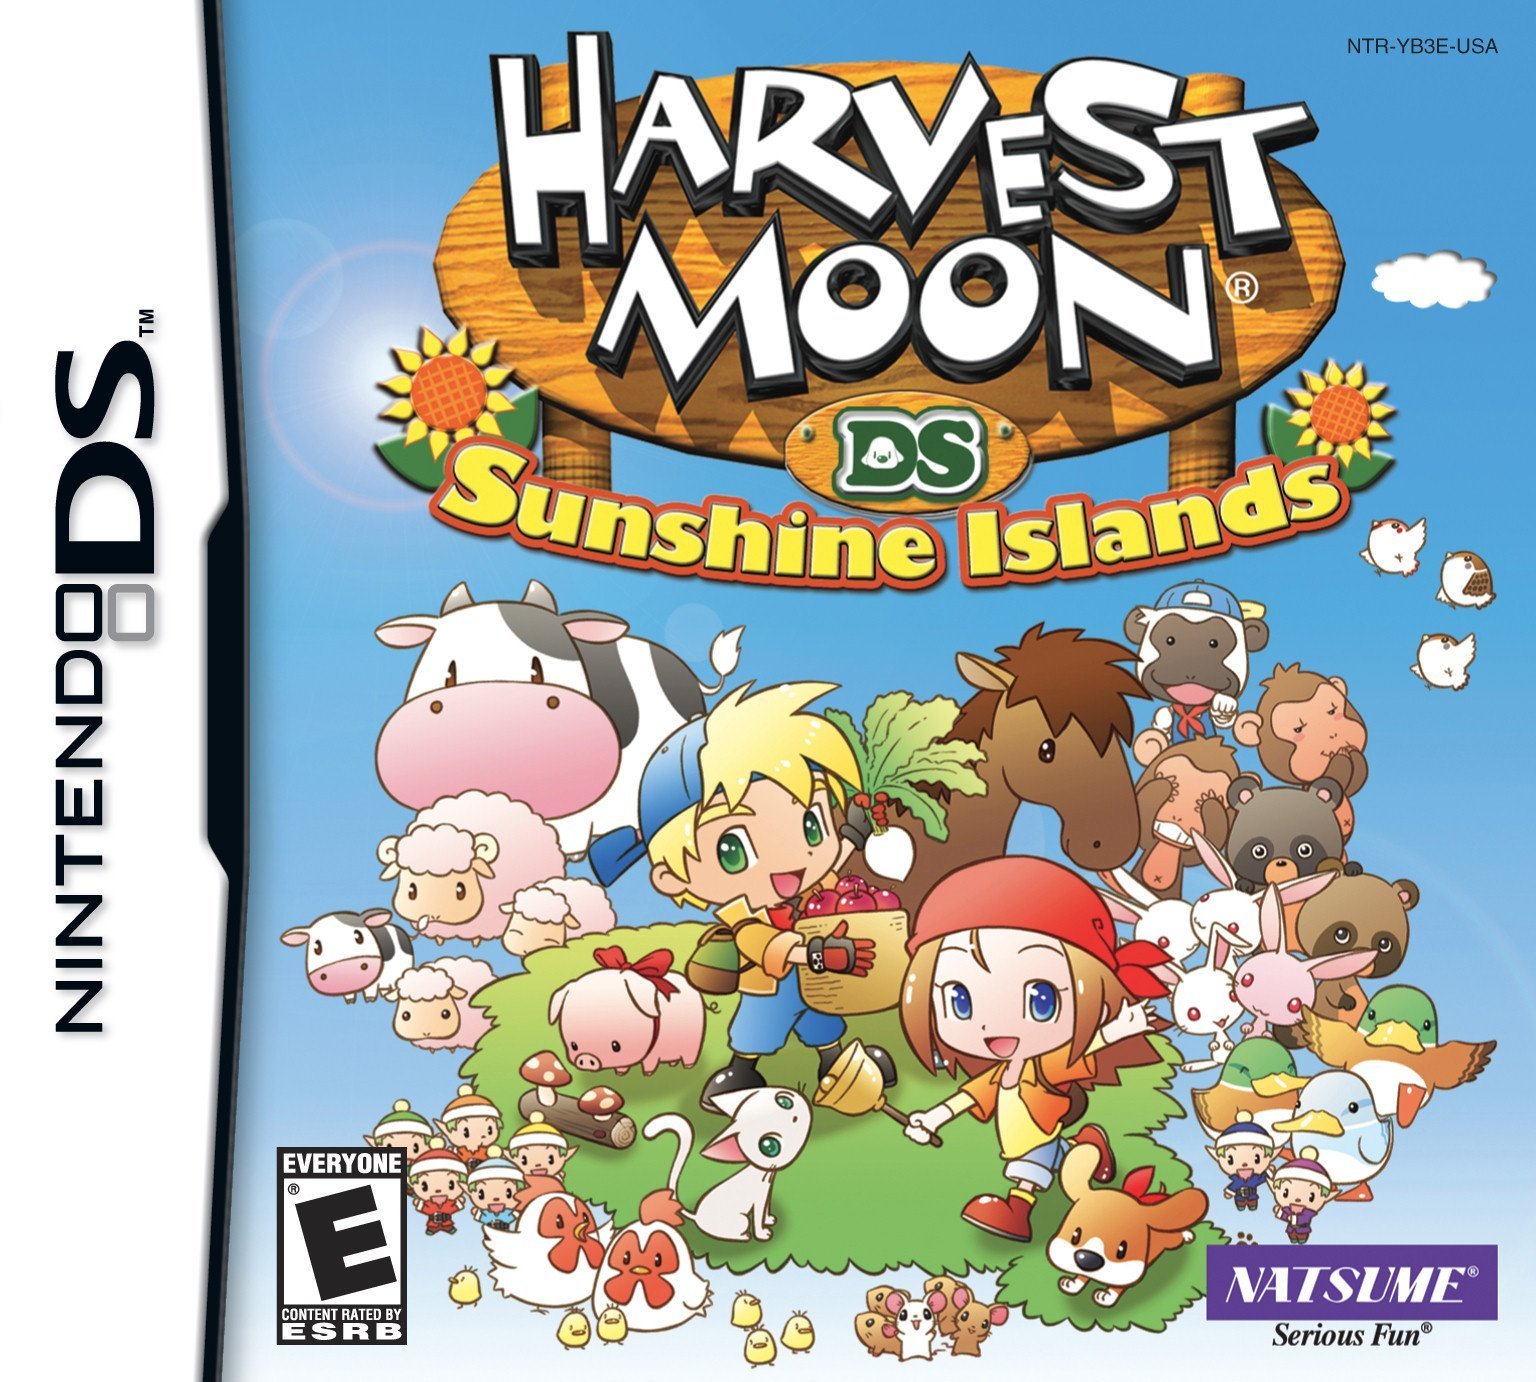 Harvest moon sunshine islands